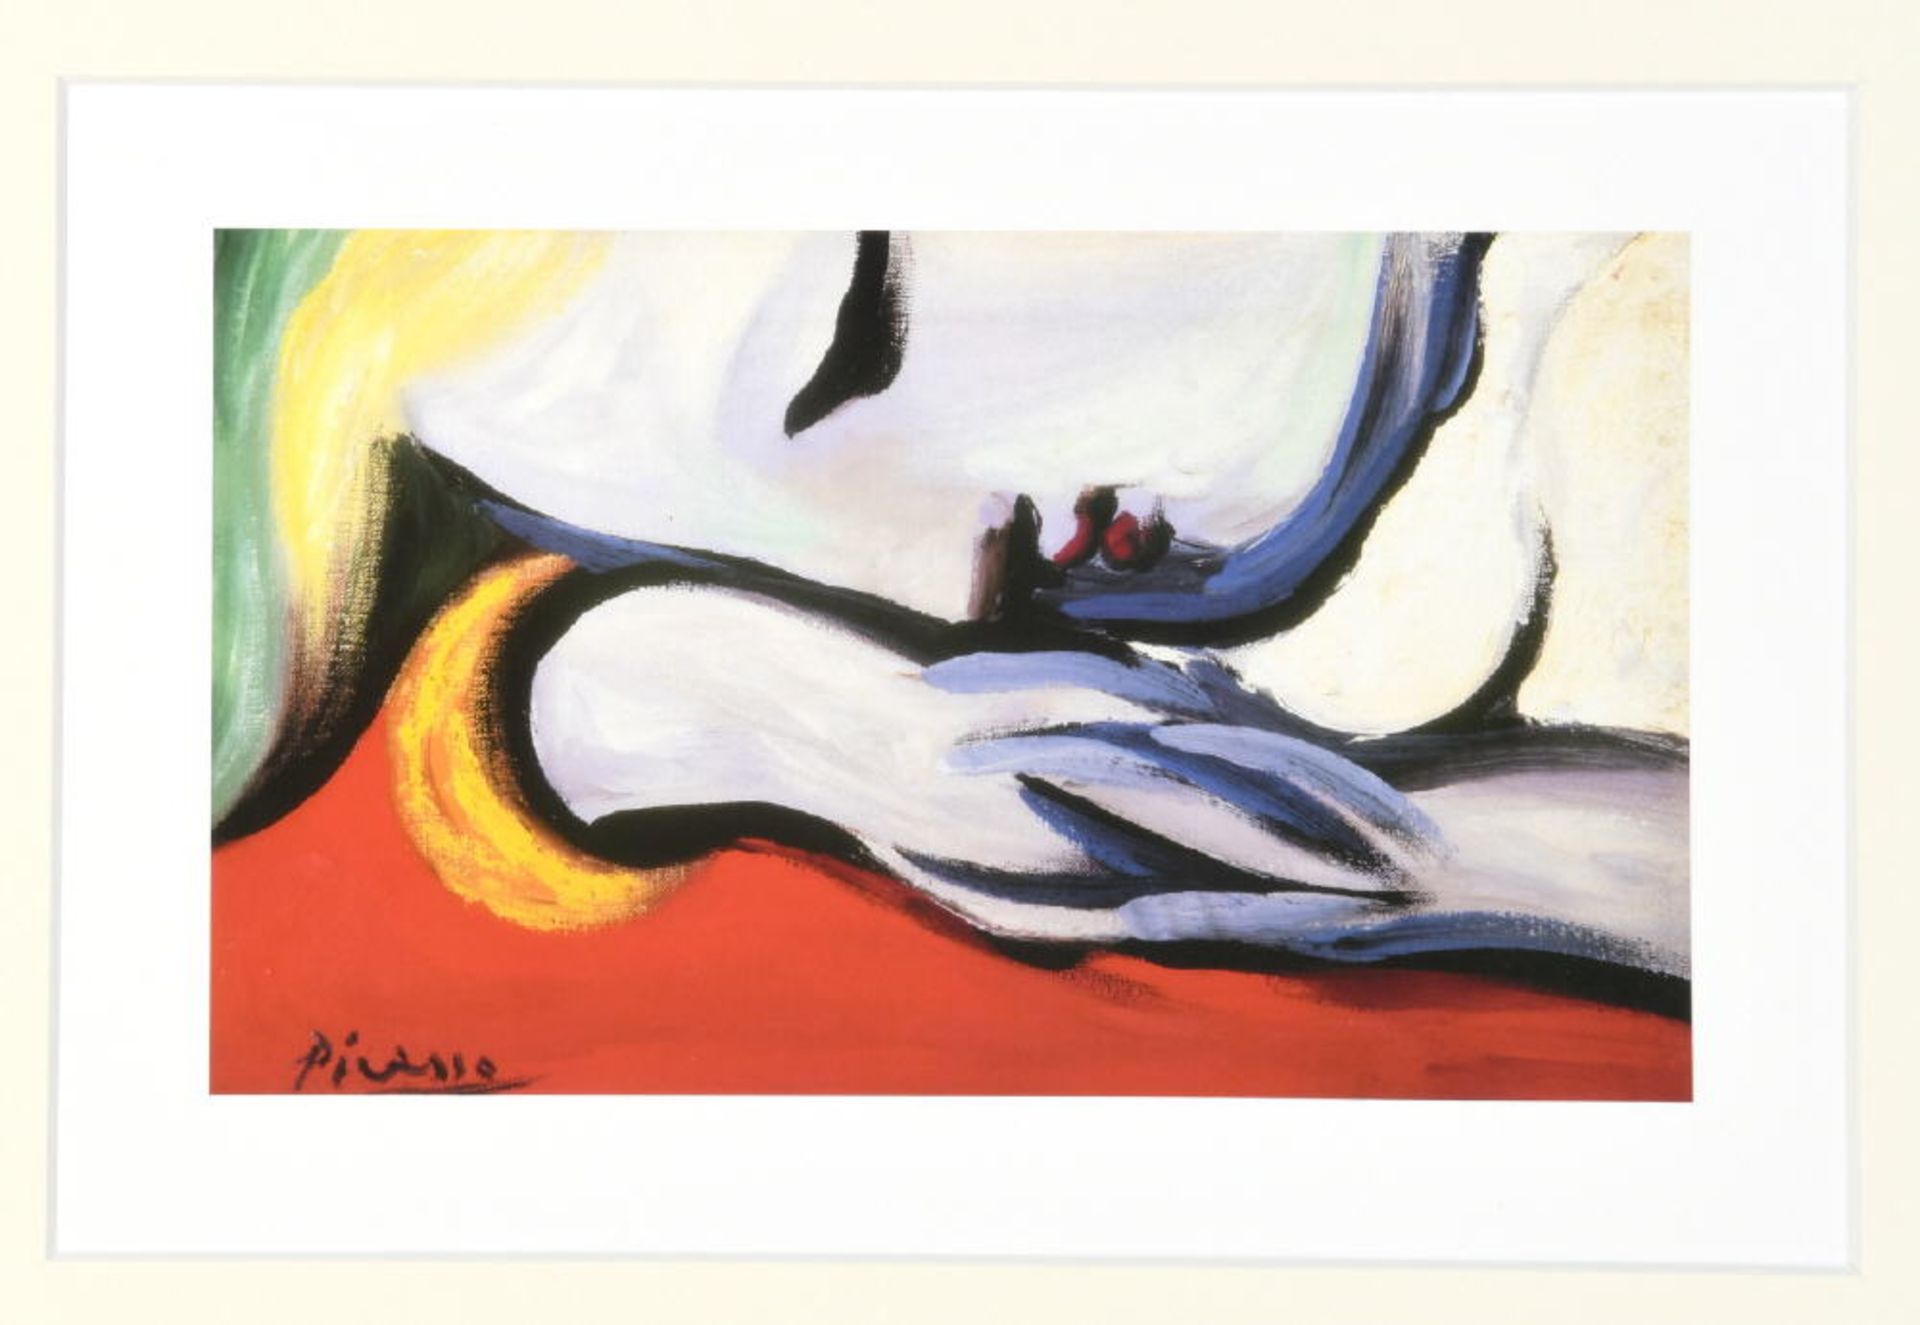 Picasso, Pablo, 1881 Malaga - 1973 Mougins